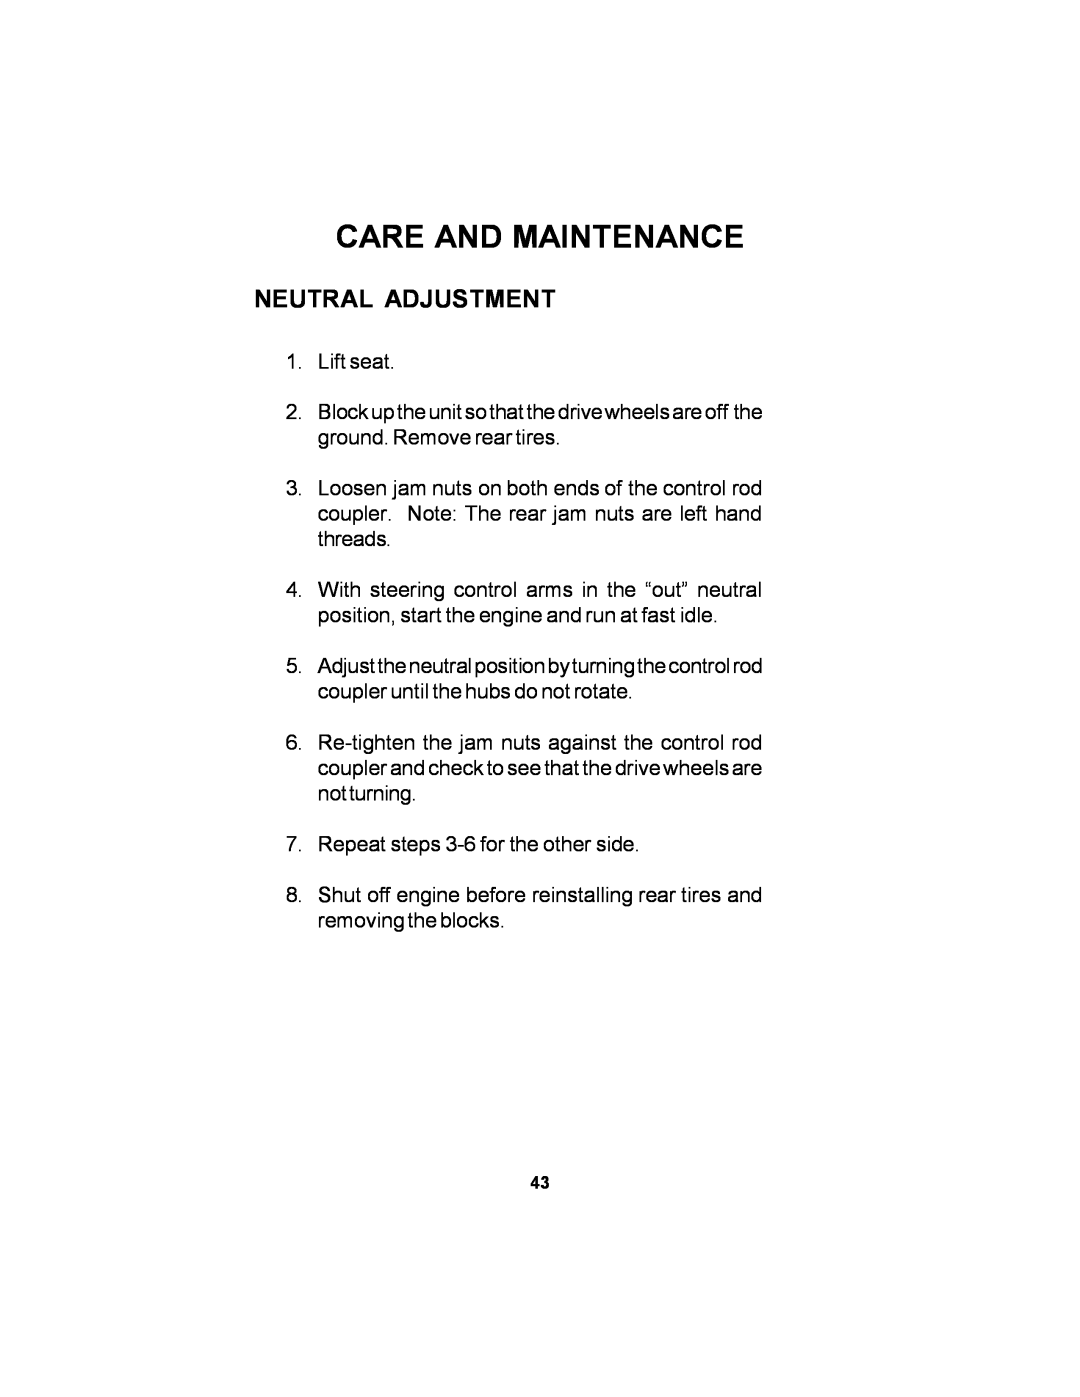 Dixon 11249-106 manual Neutral Adjustment, Care And Maintenance 